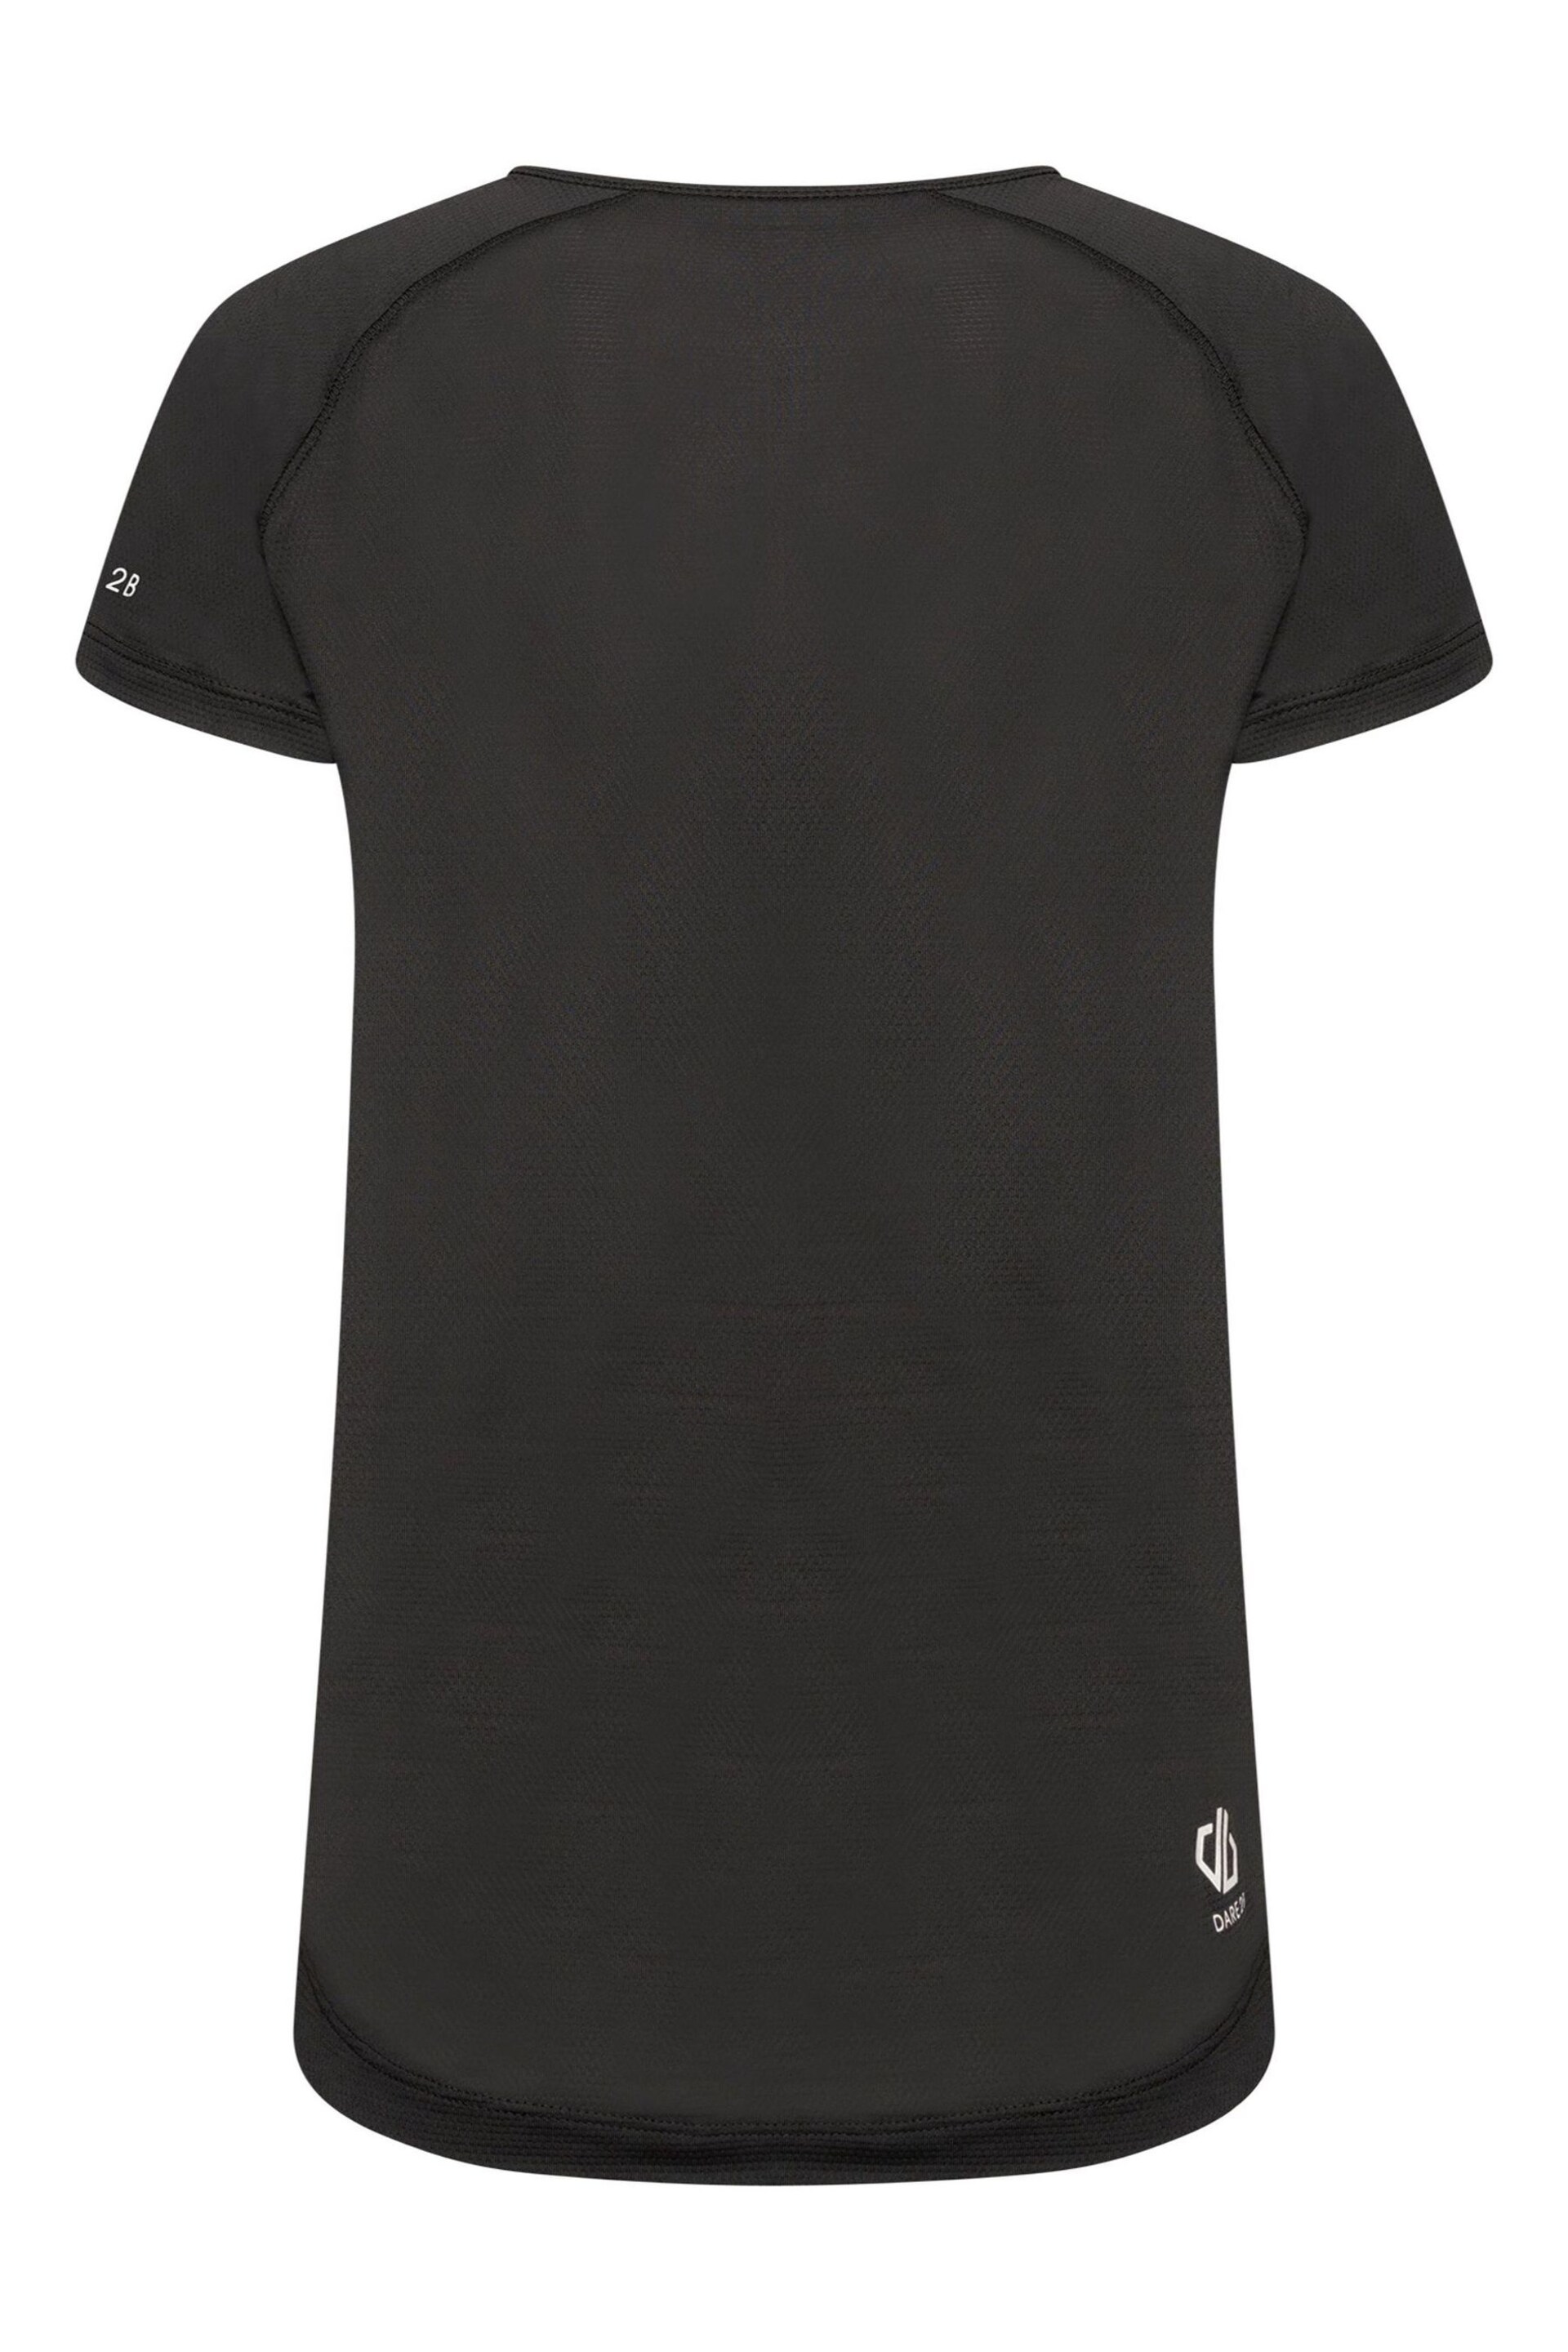 Dare 2b Corral Lightweight Black T-Shirt - Image 6 of 6